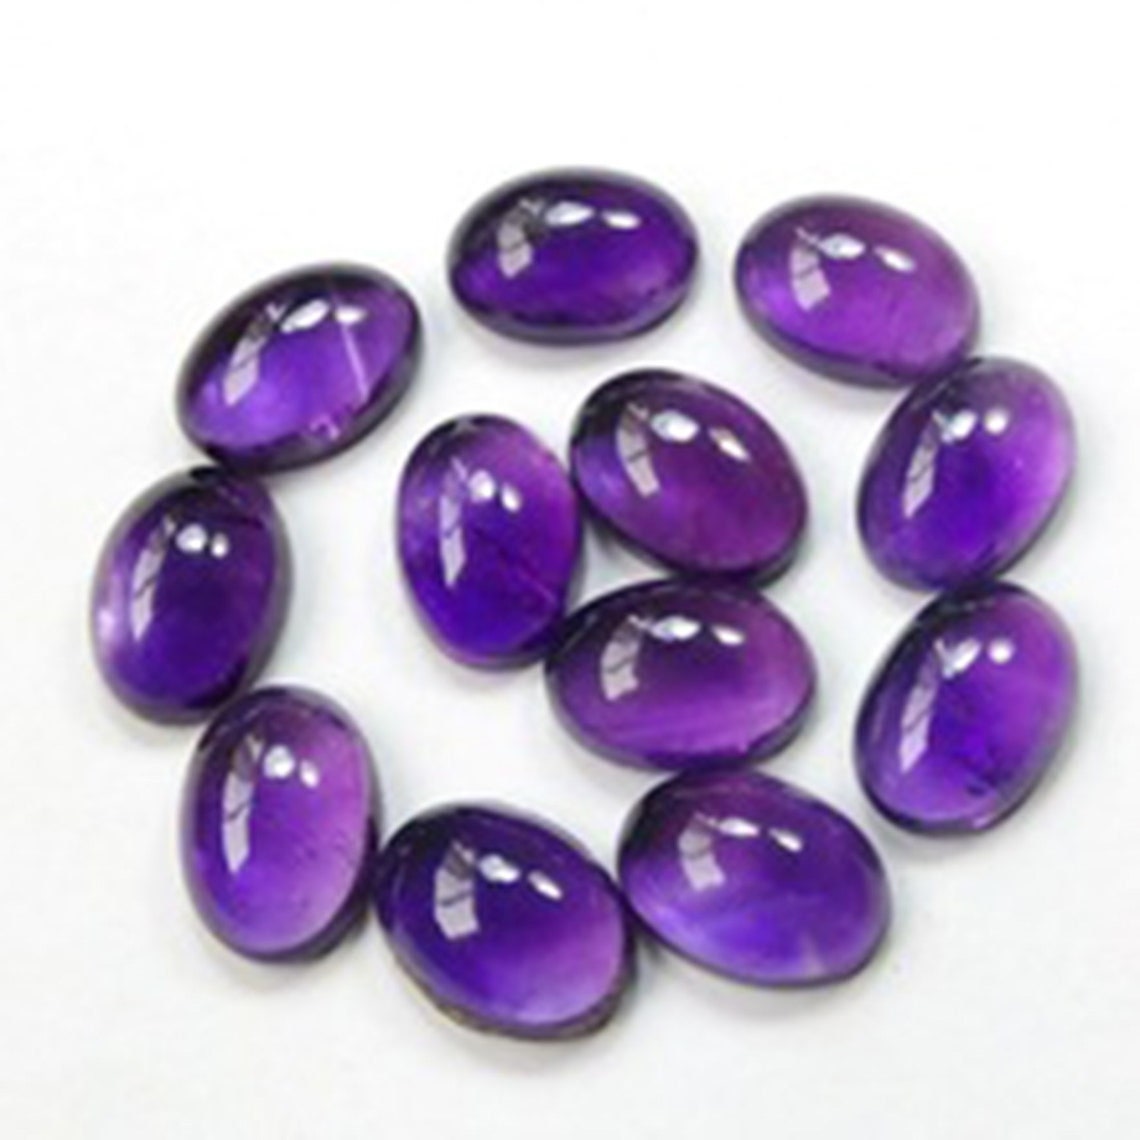 50 6mm Czech glass flat round Lumi Amethyst or Purple beads